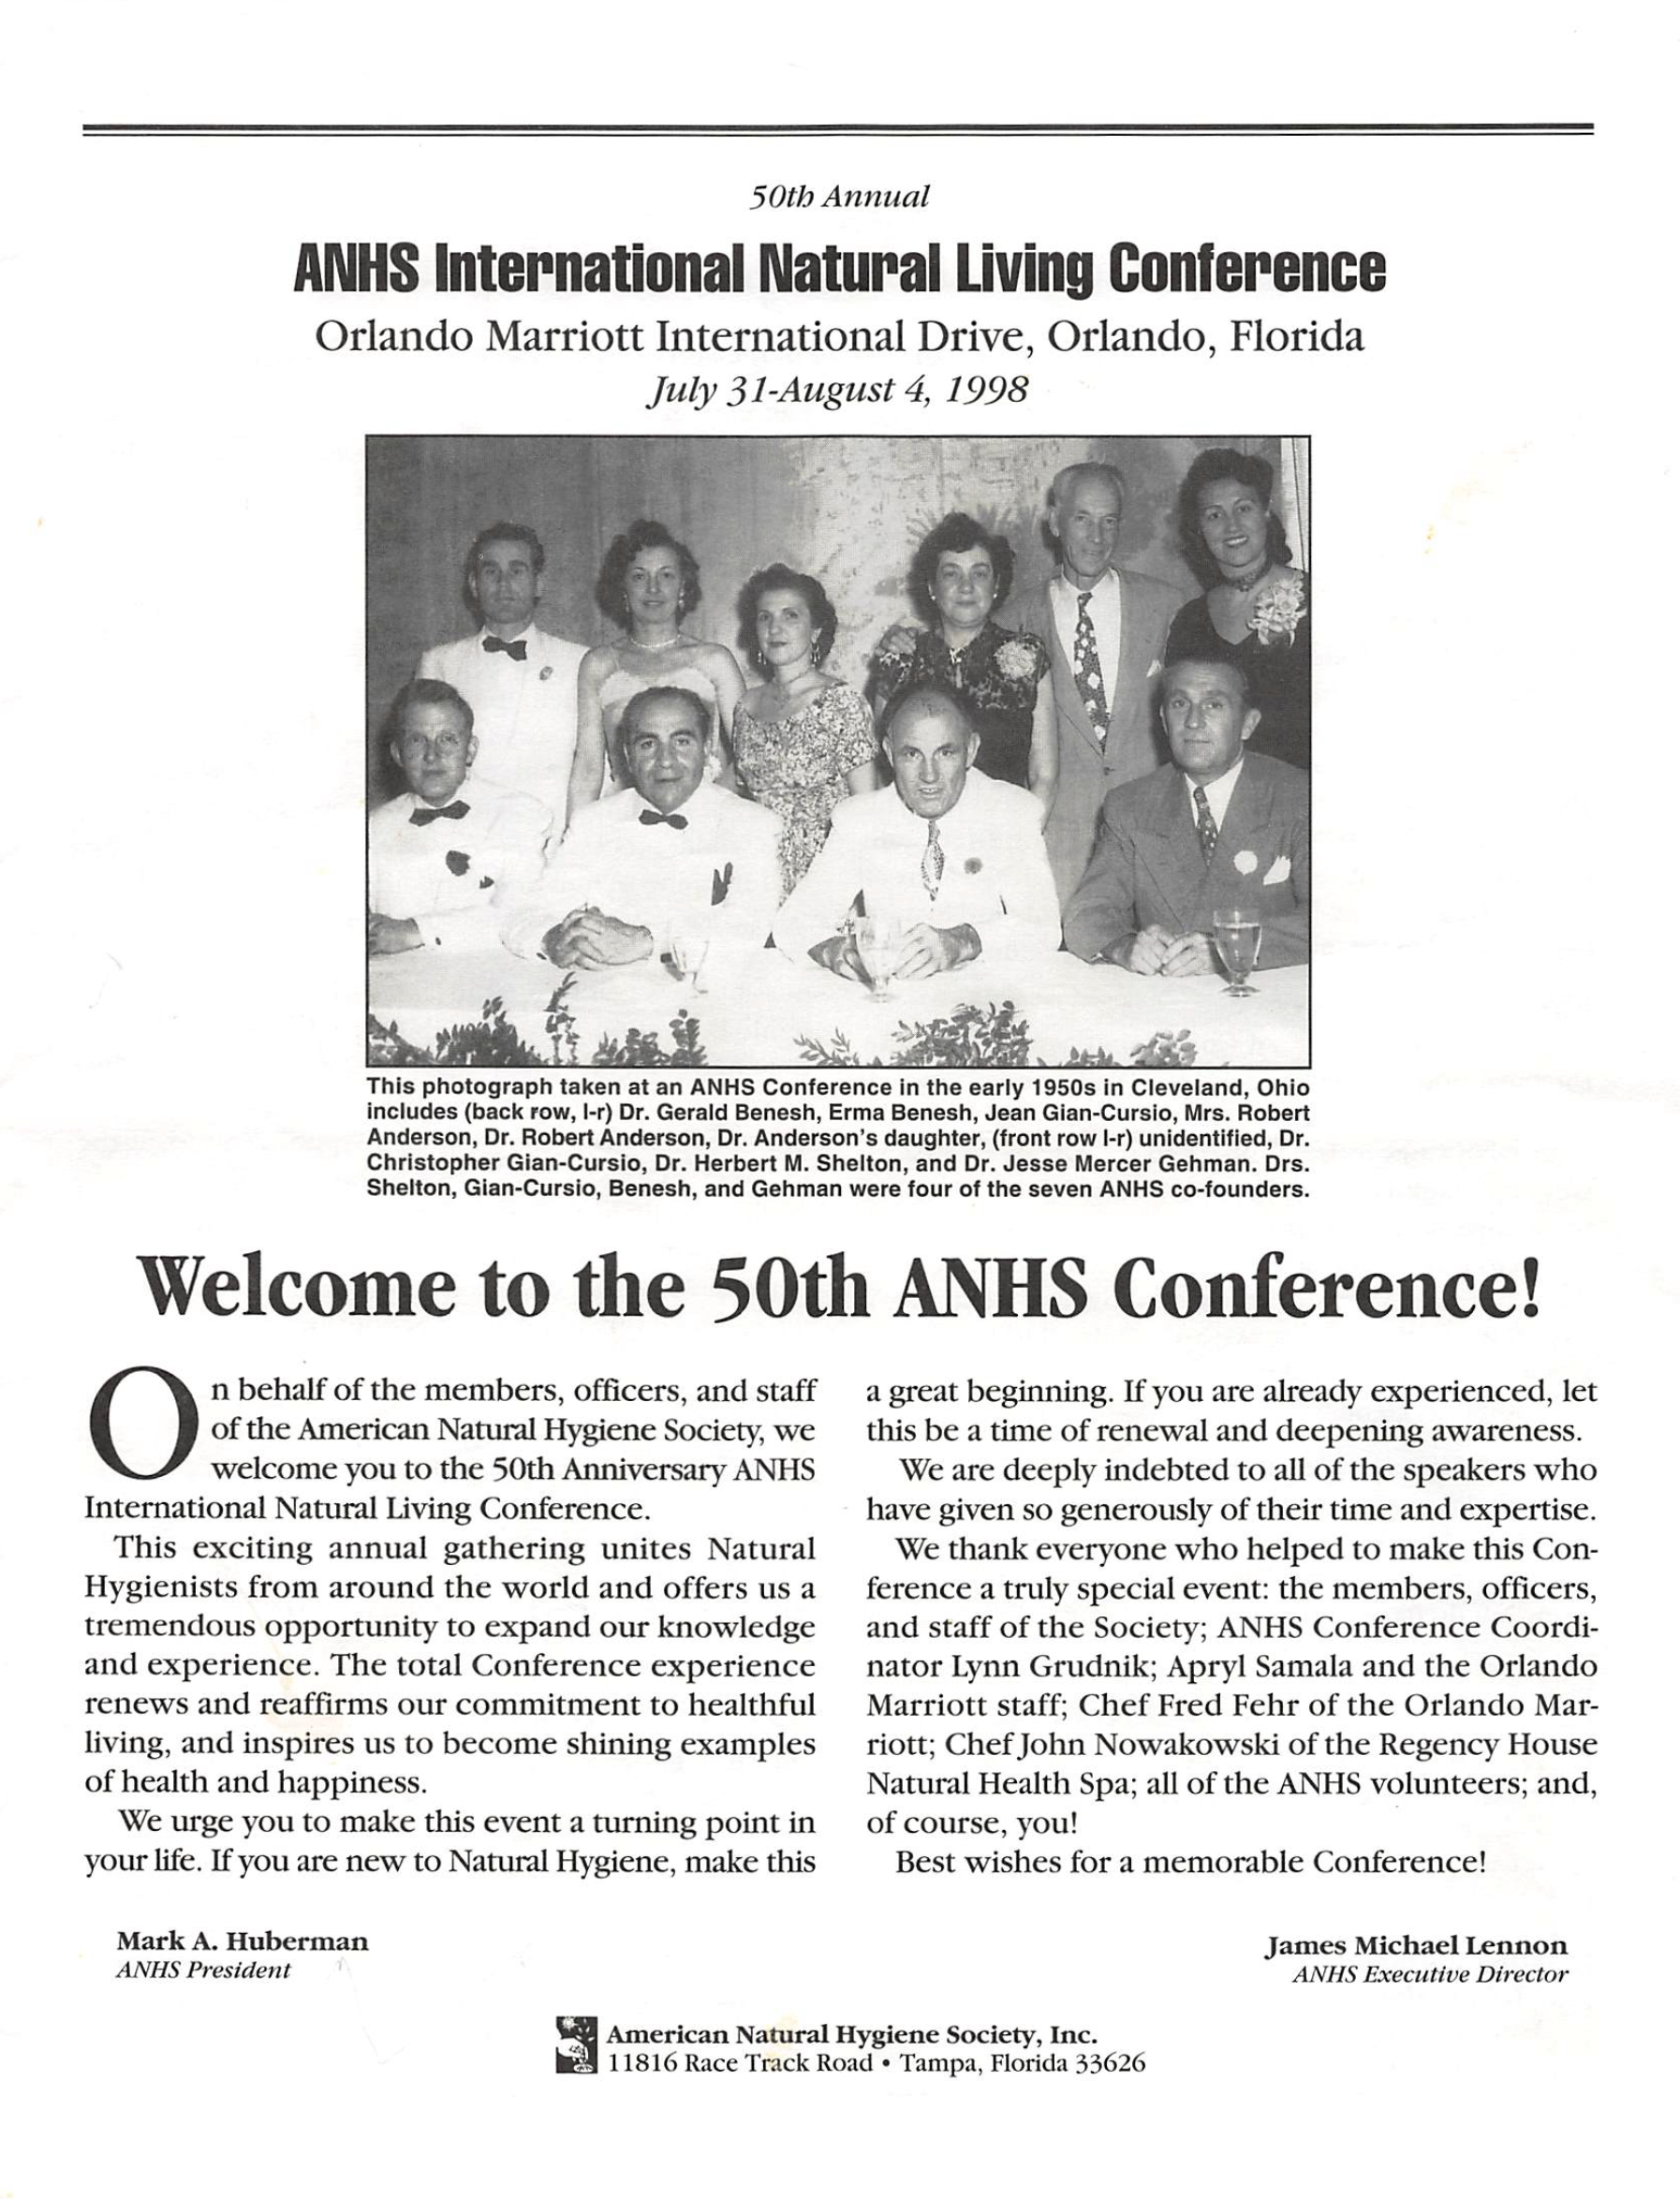 Conference Program. Orlando, 1998